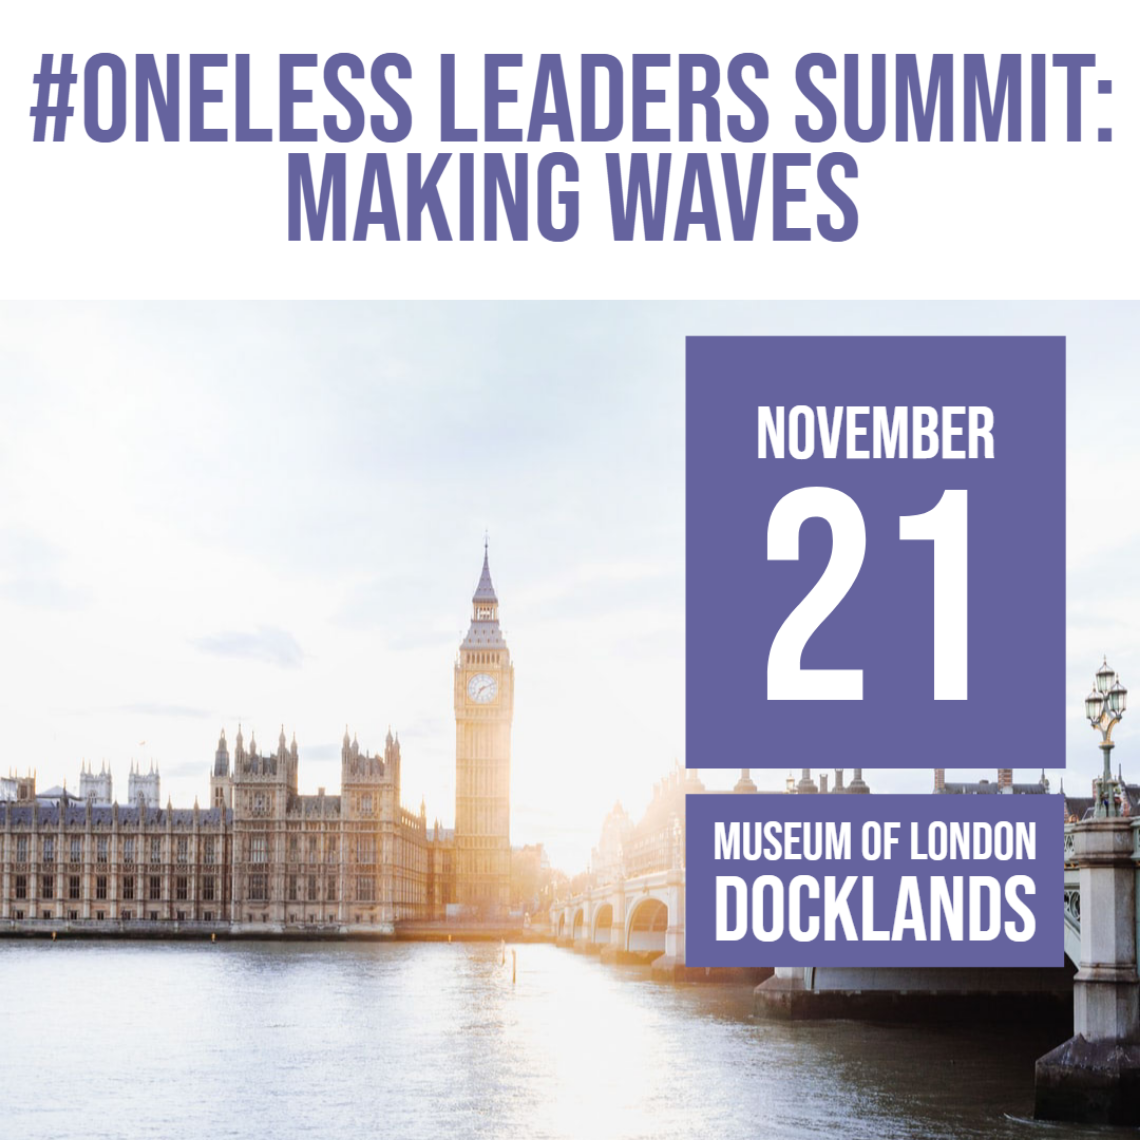 #ONELESS LEADERS SUMMIT: MAKING WAVES